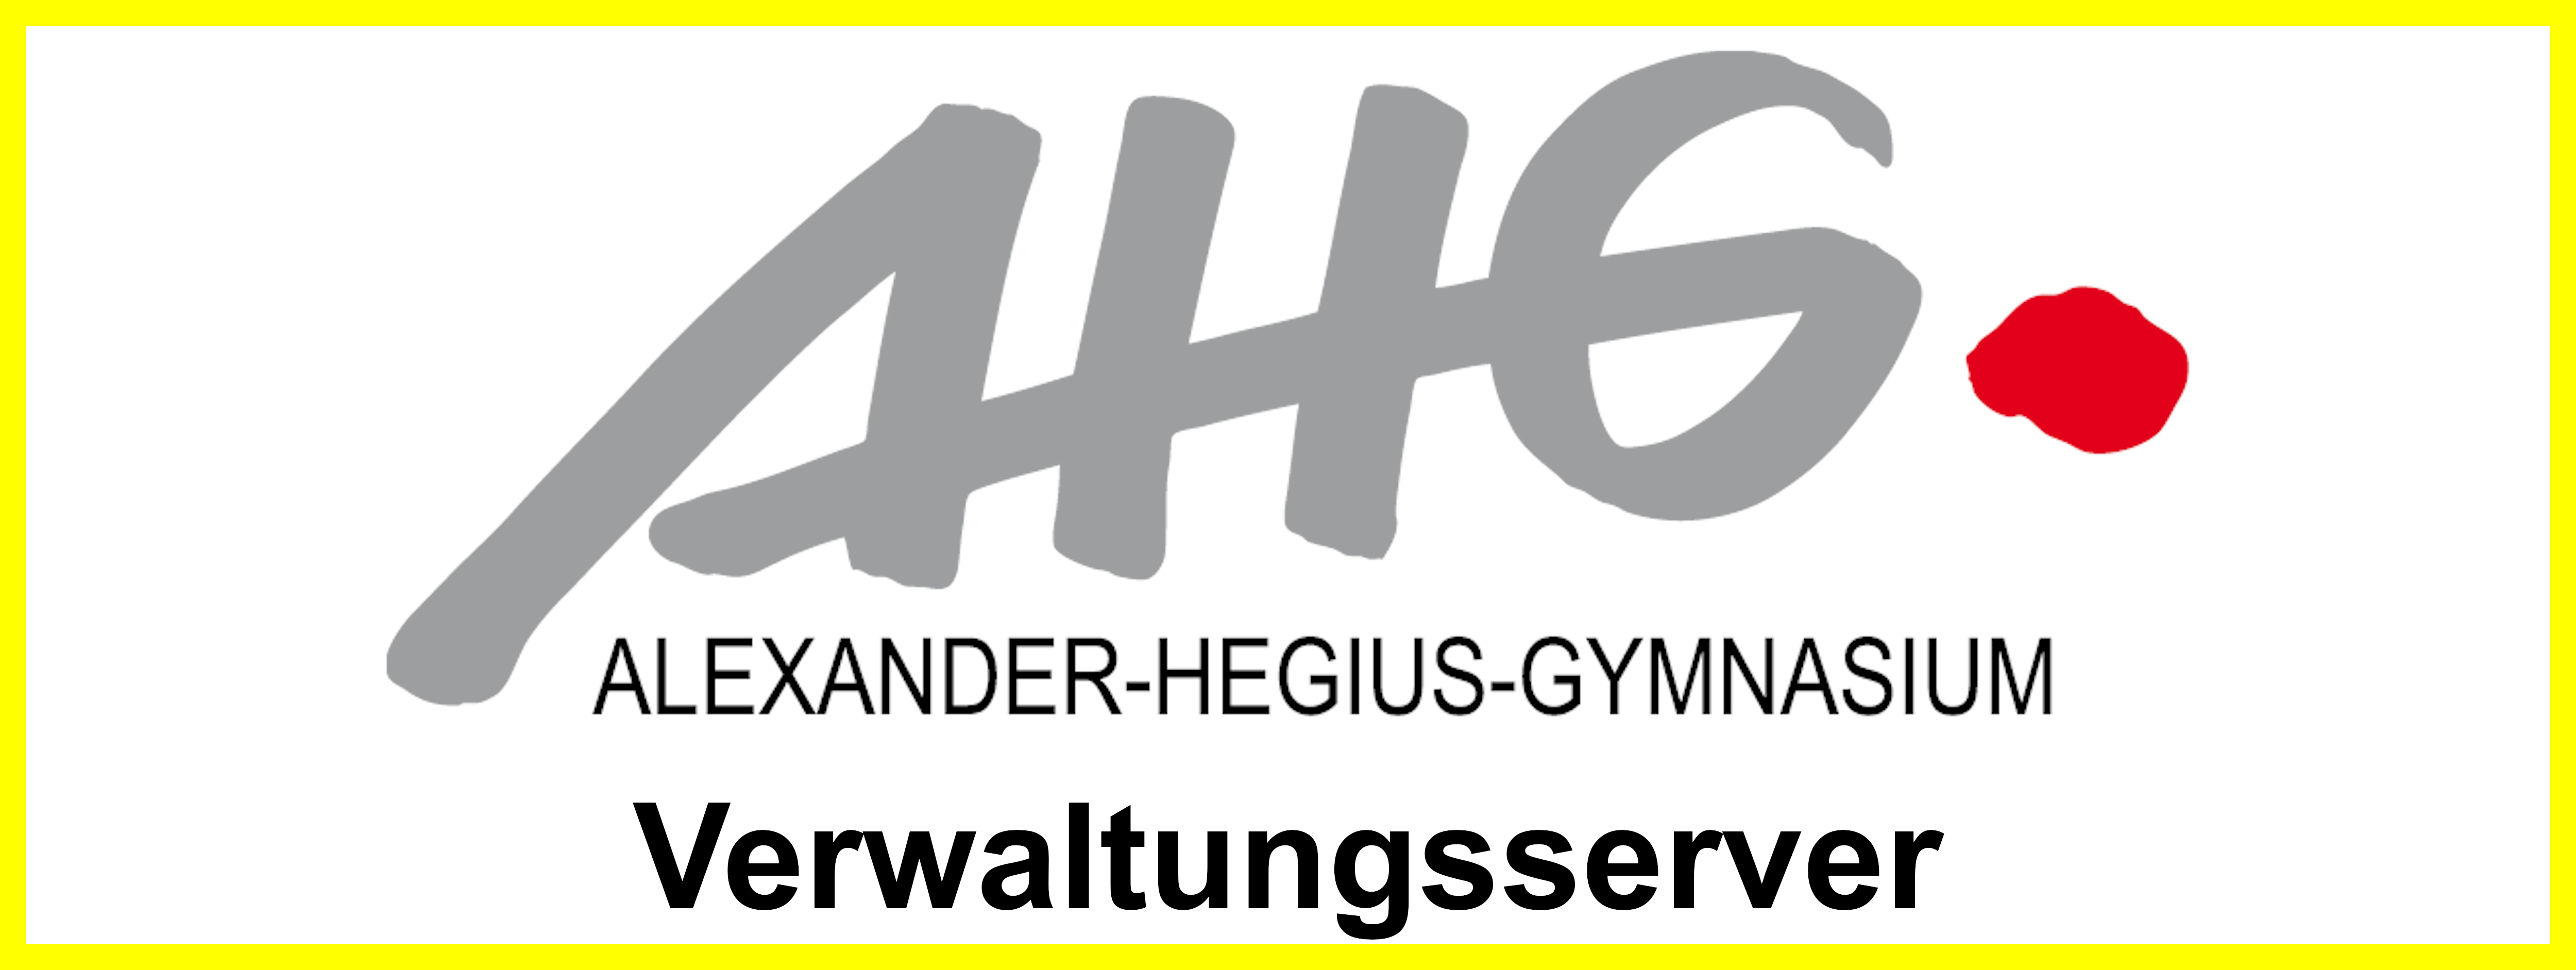 Verwaltung Alexander-Hegius-Gymnasium